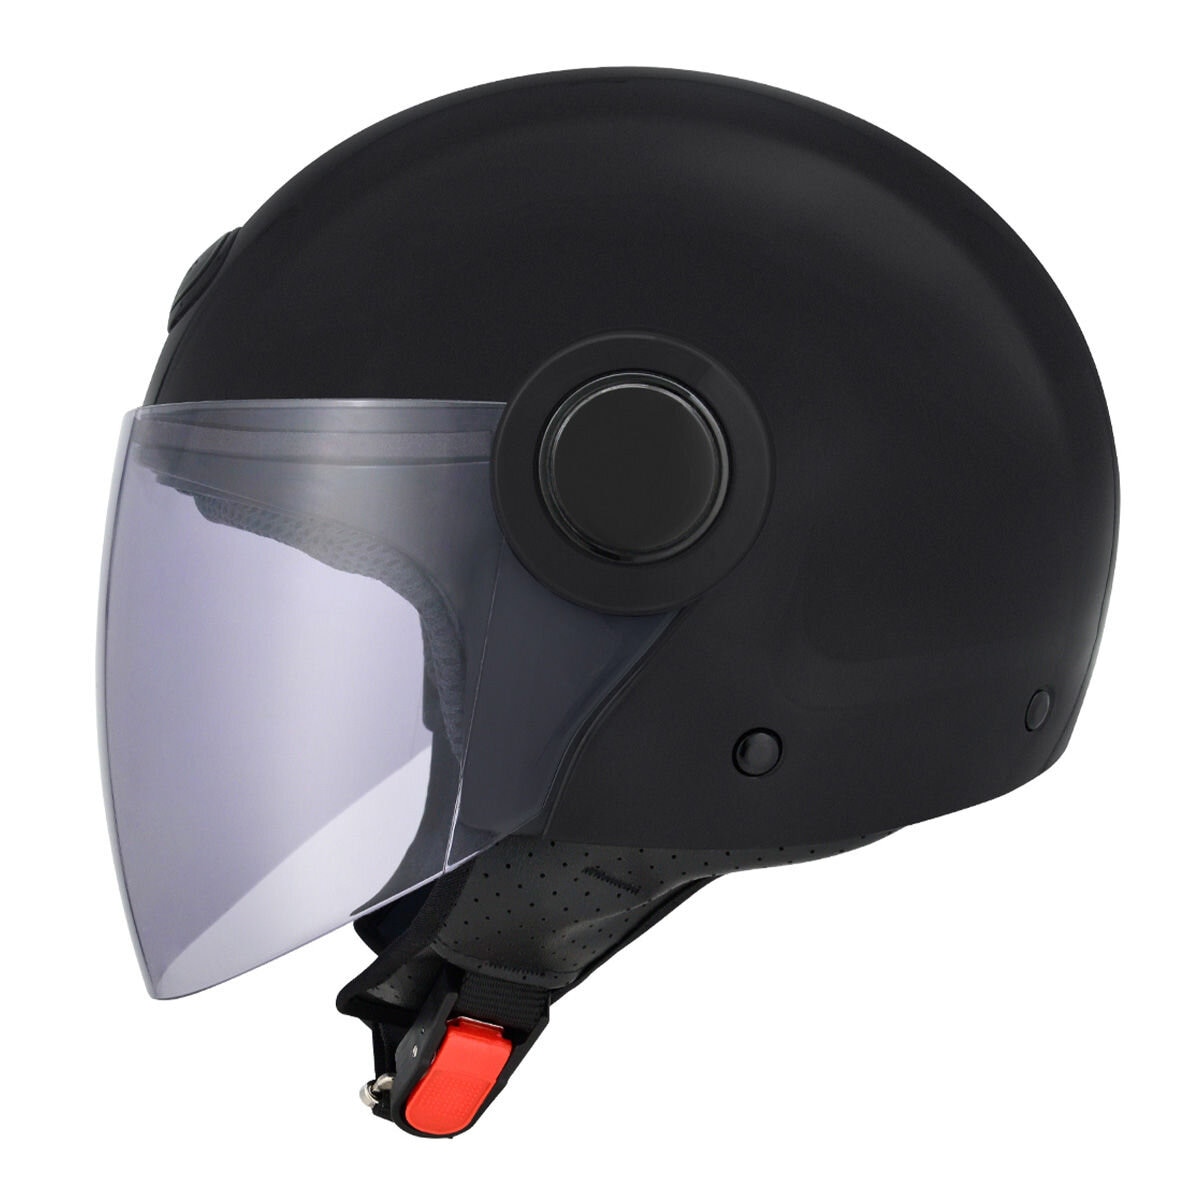 M2R 1/2罩安全帽 騎乘機車用防護頭盔 M-506 亮黑 S